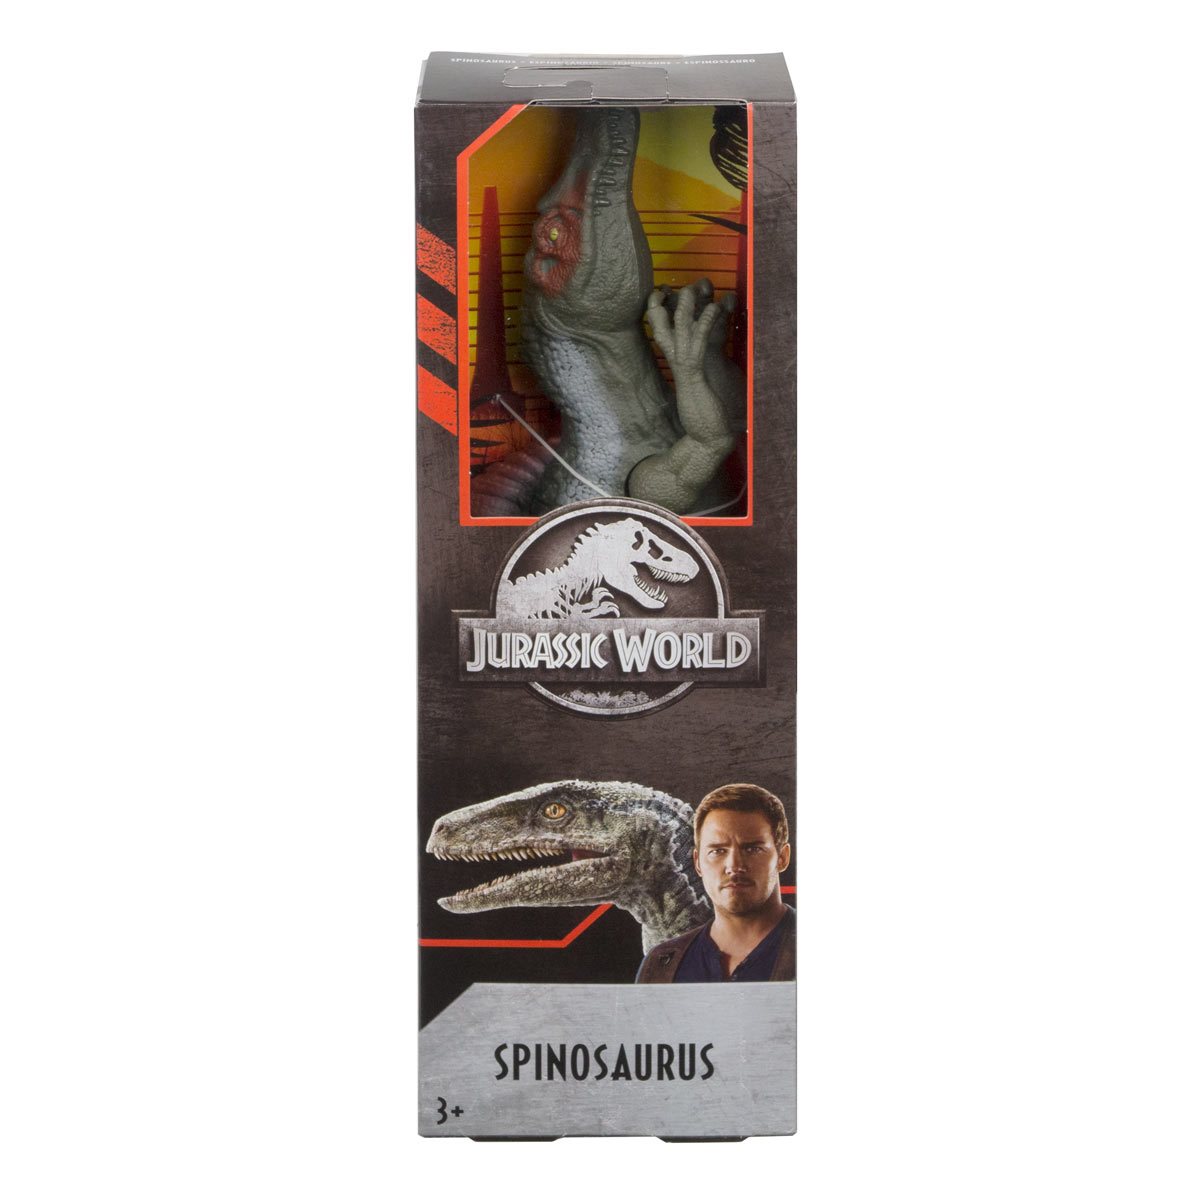 Details about   Jurassic World Spinosaurus Basic 12-inch Figure 